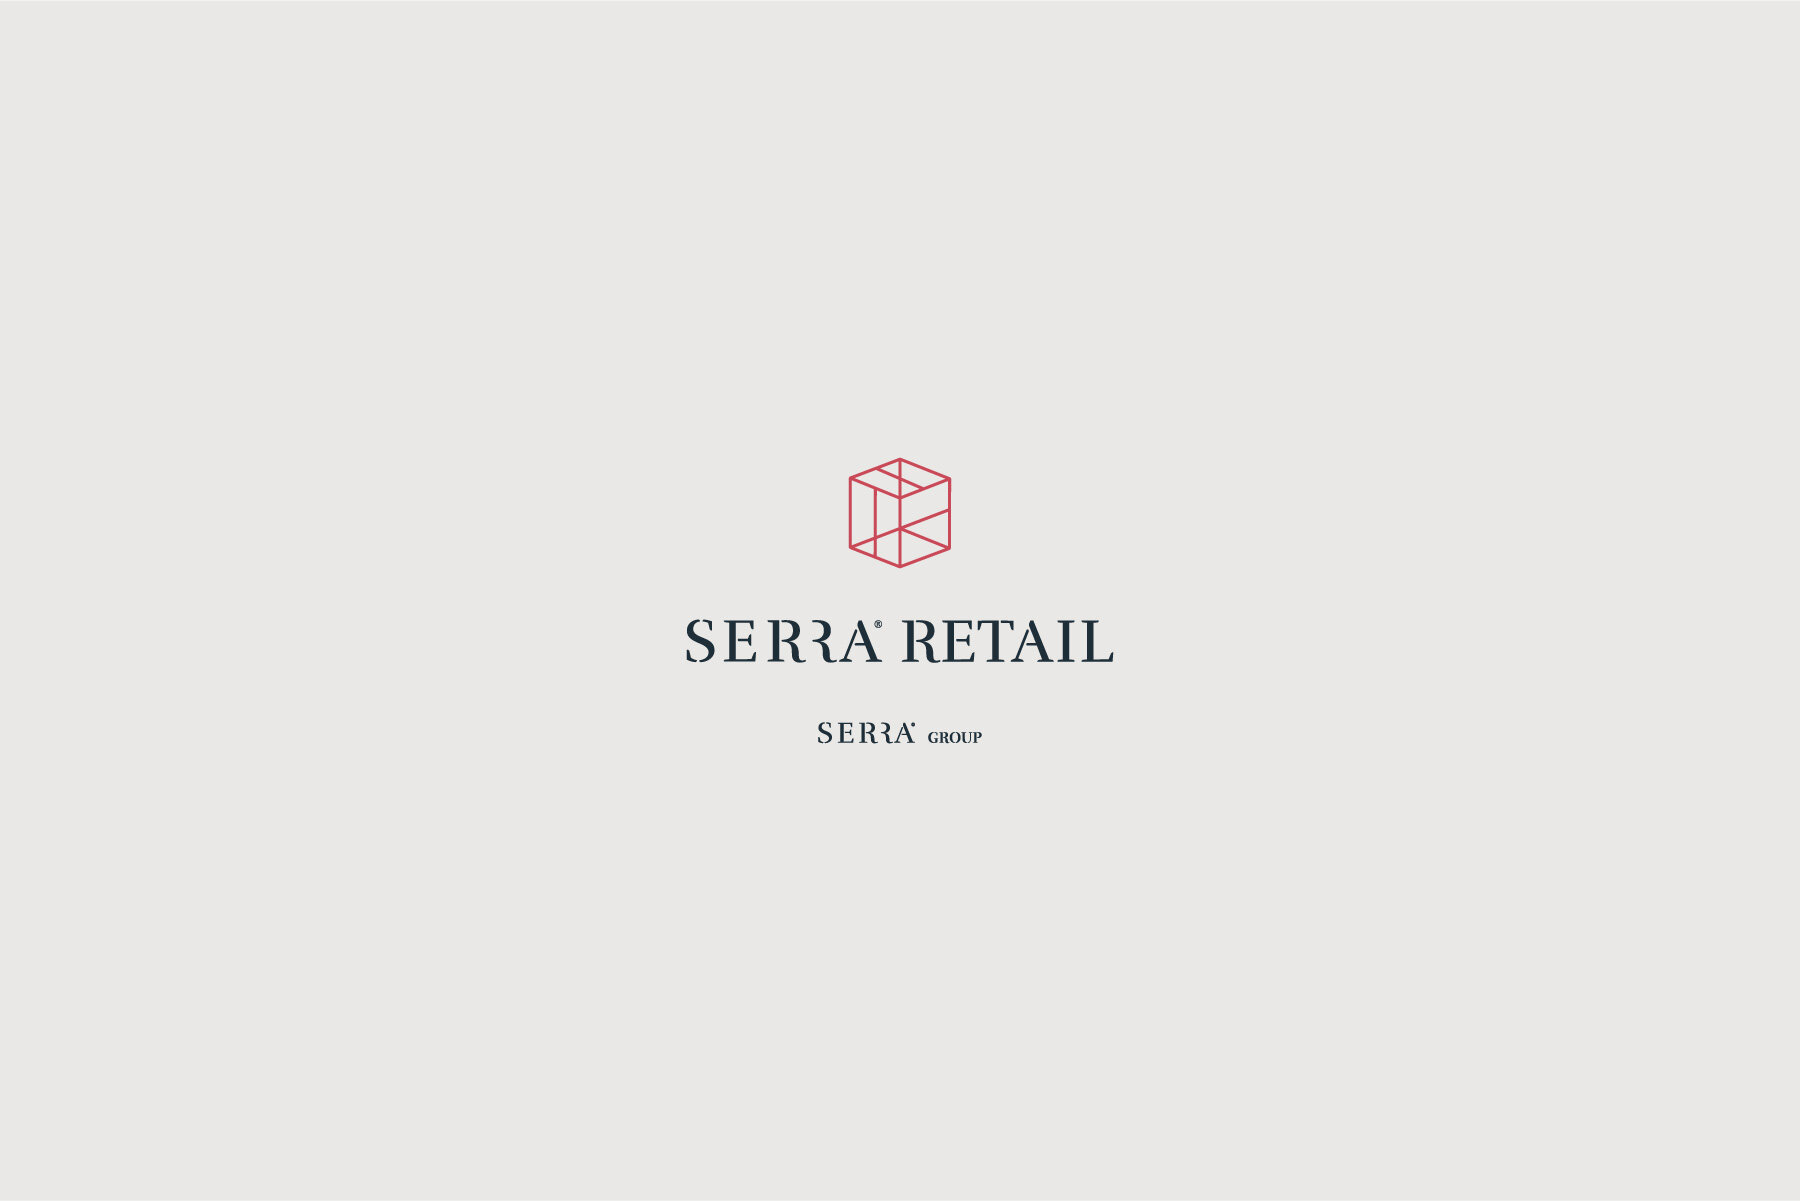 brand-identity-angola-serra-group-8.jpg